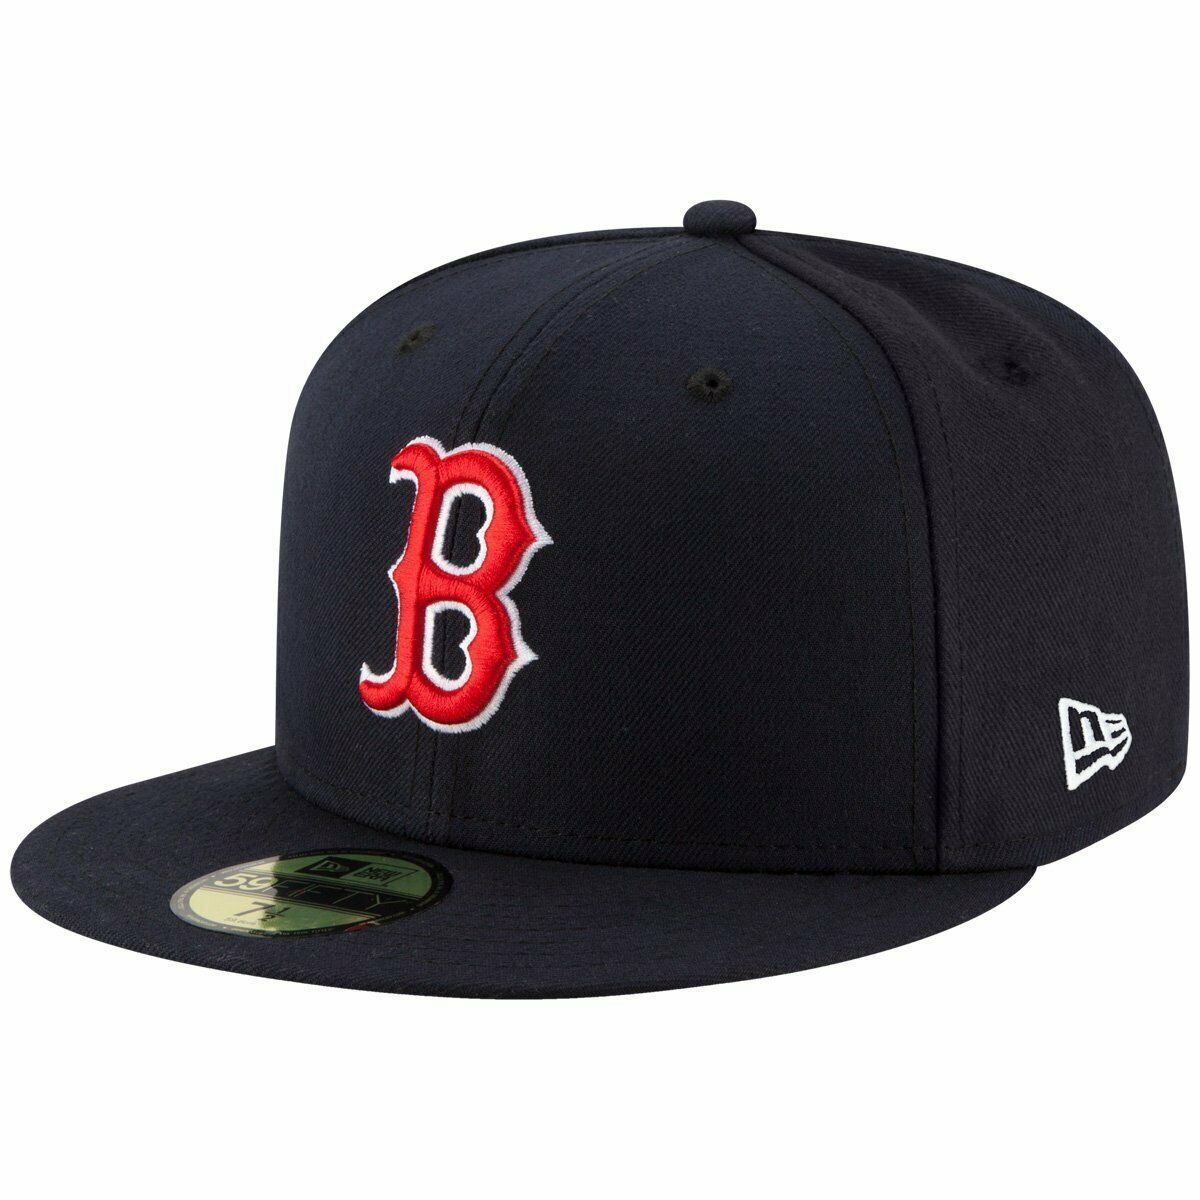 New Era New Boston Red Sox Cap Navy Blue